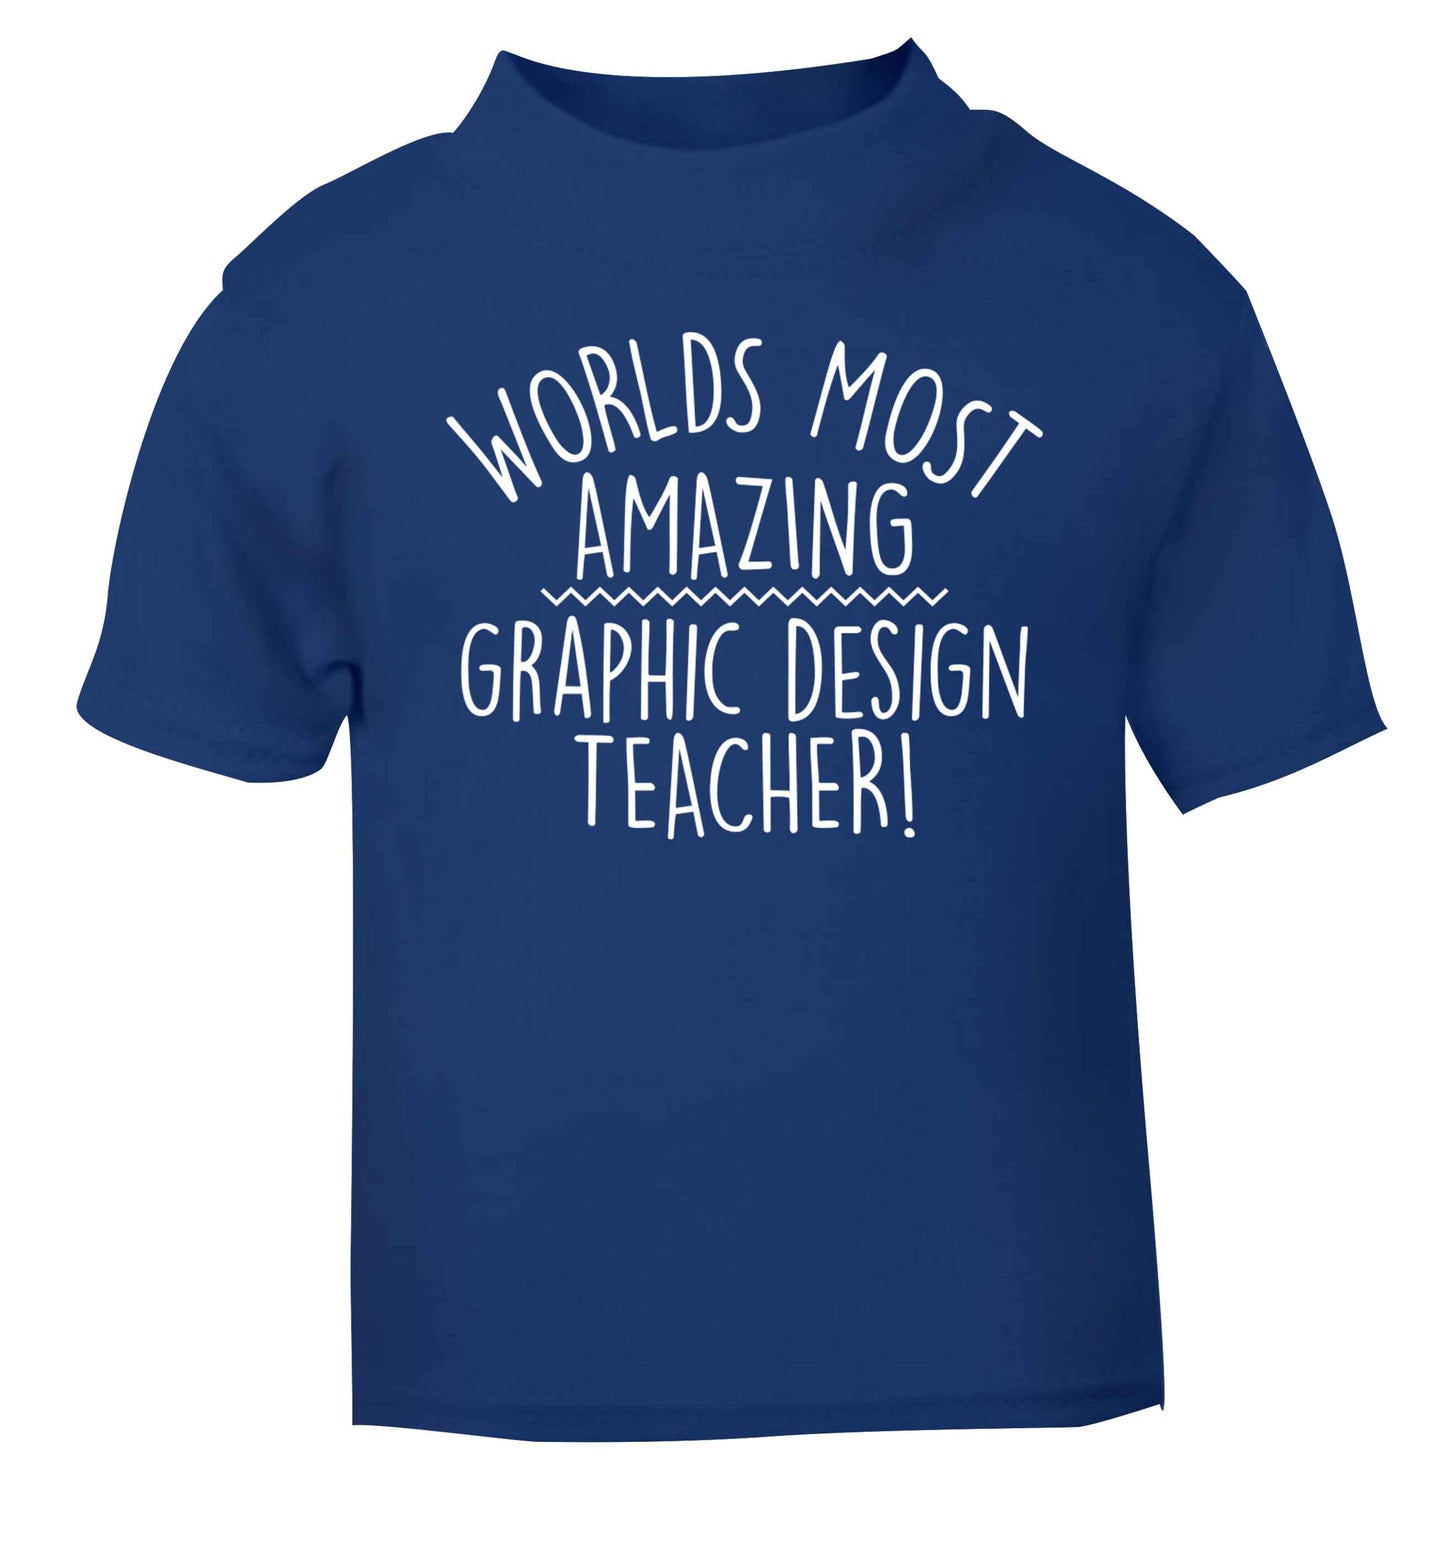 Worlds most amazing graphic design teacher blue baby toddler Tshirt 2 Years